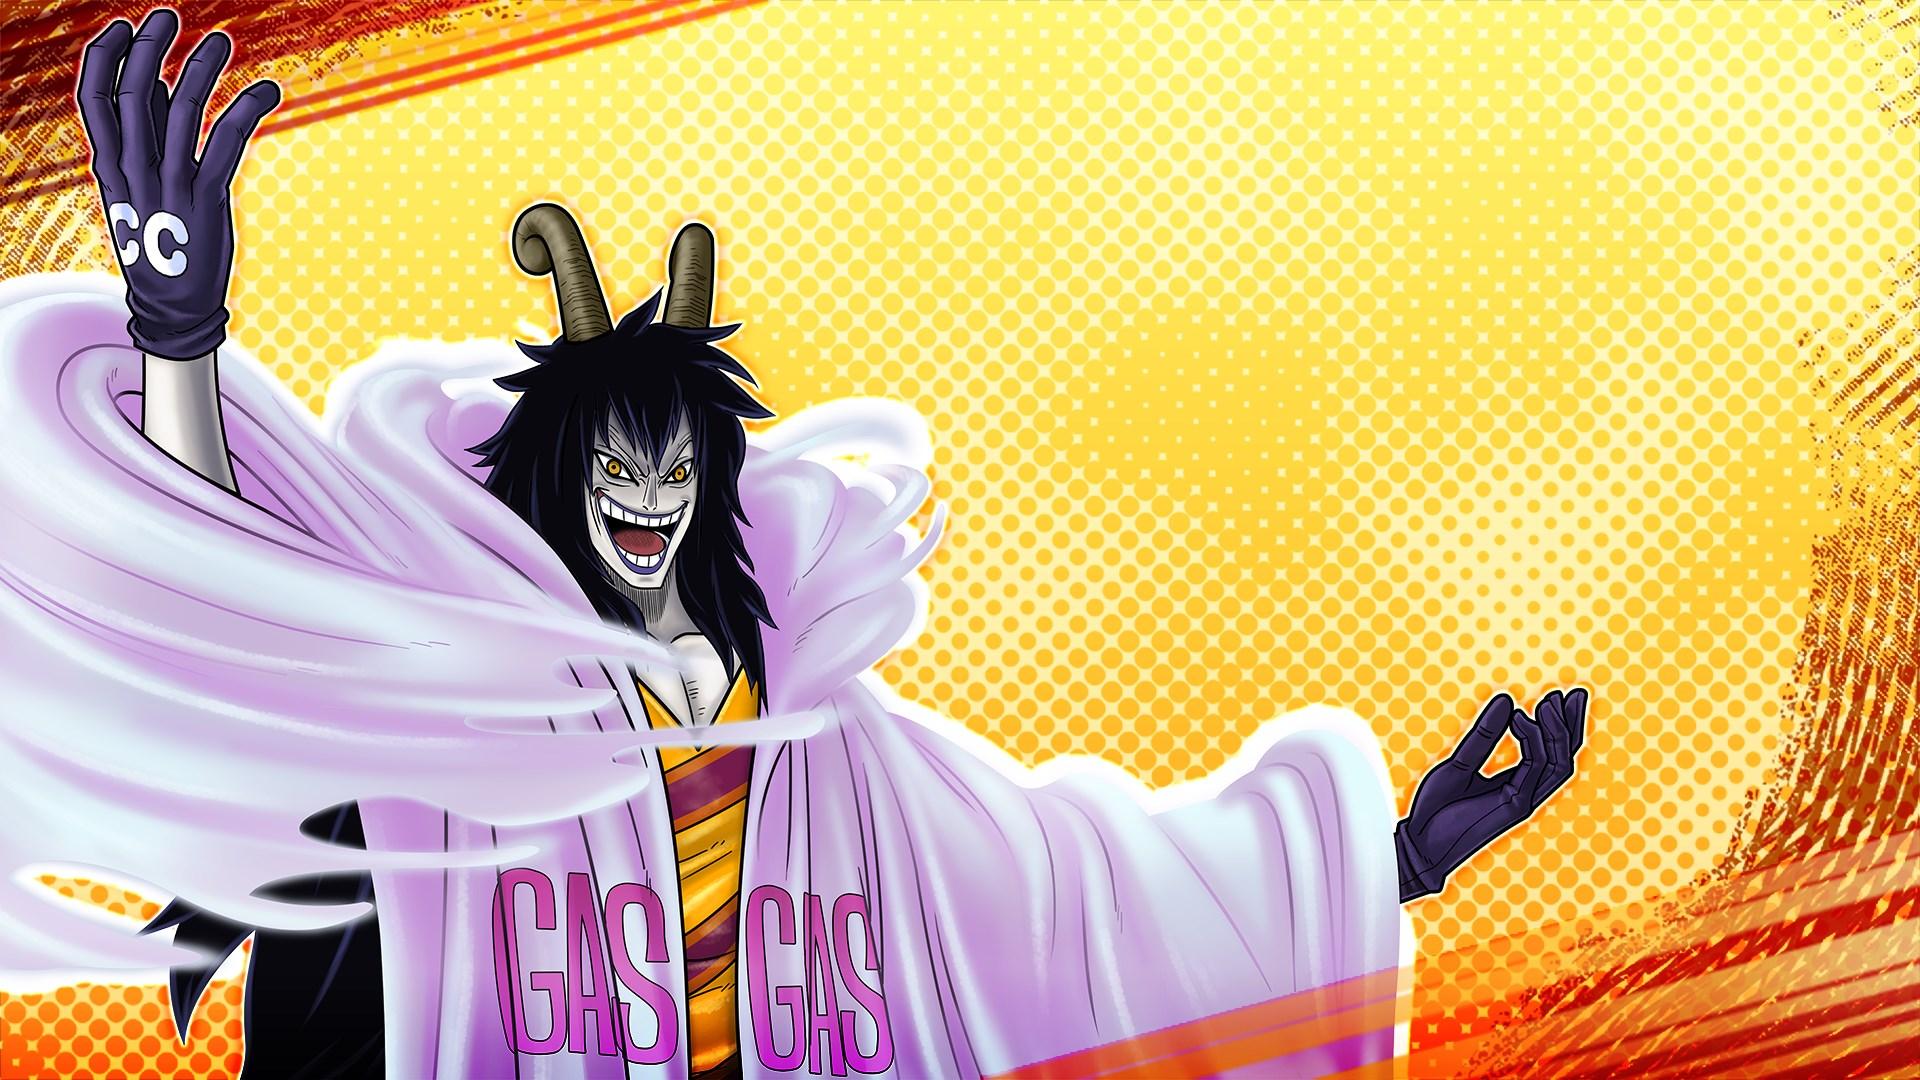 Caesar Clown Desktop Wallpaper, One Piece, Anime